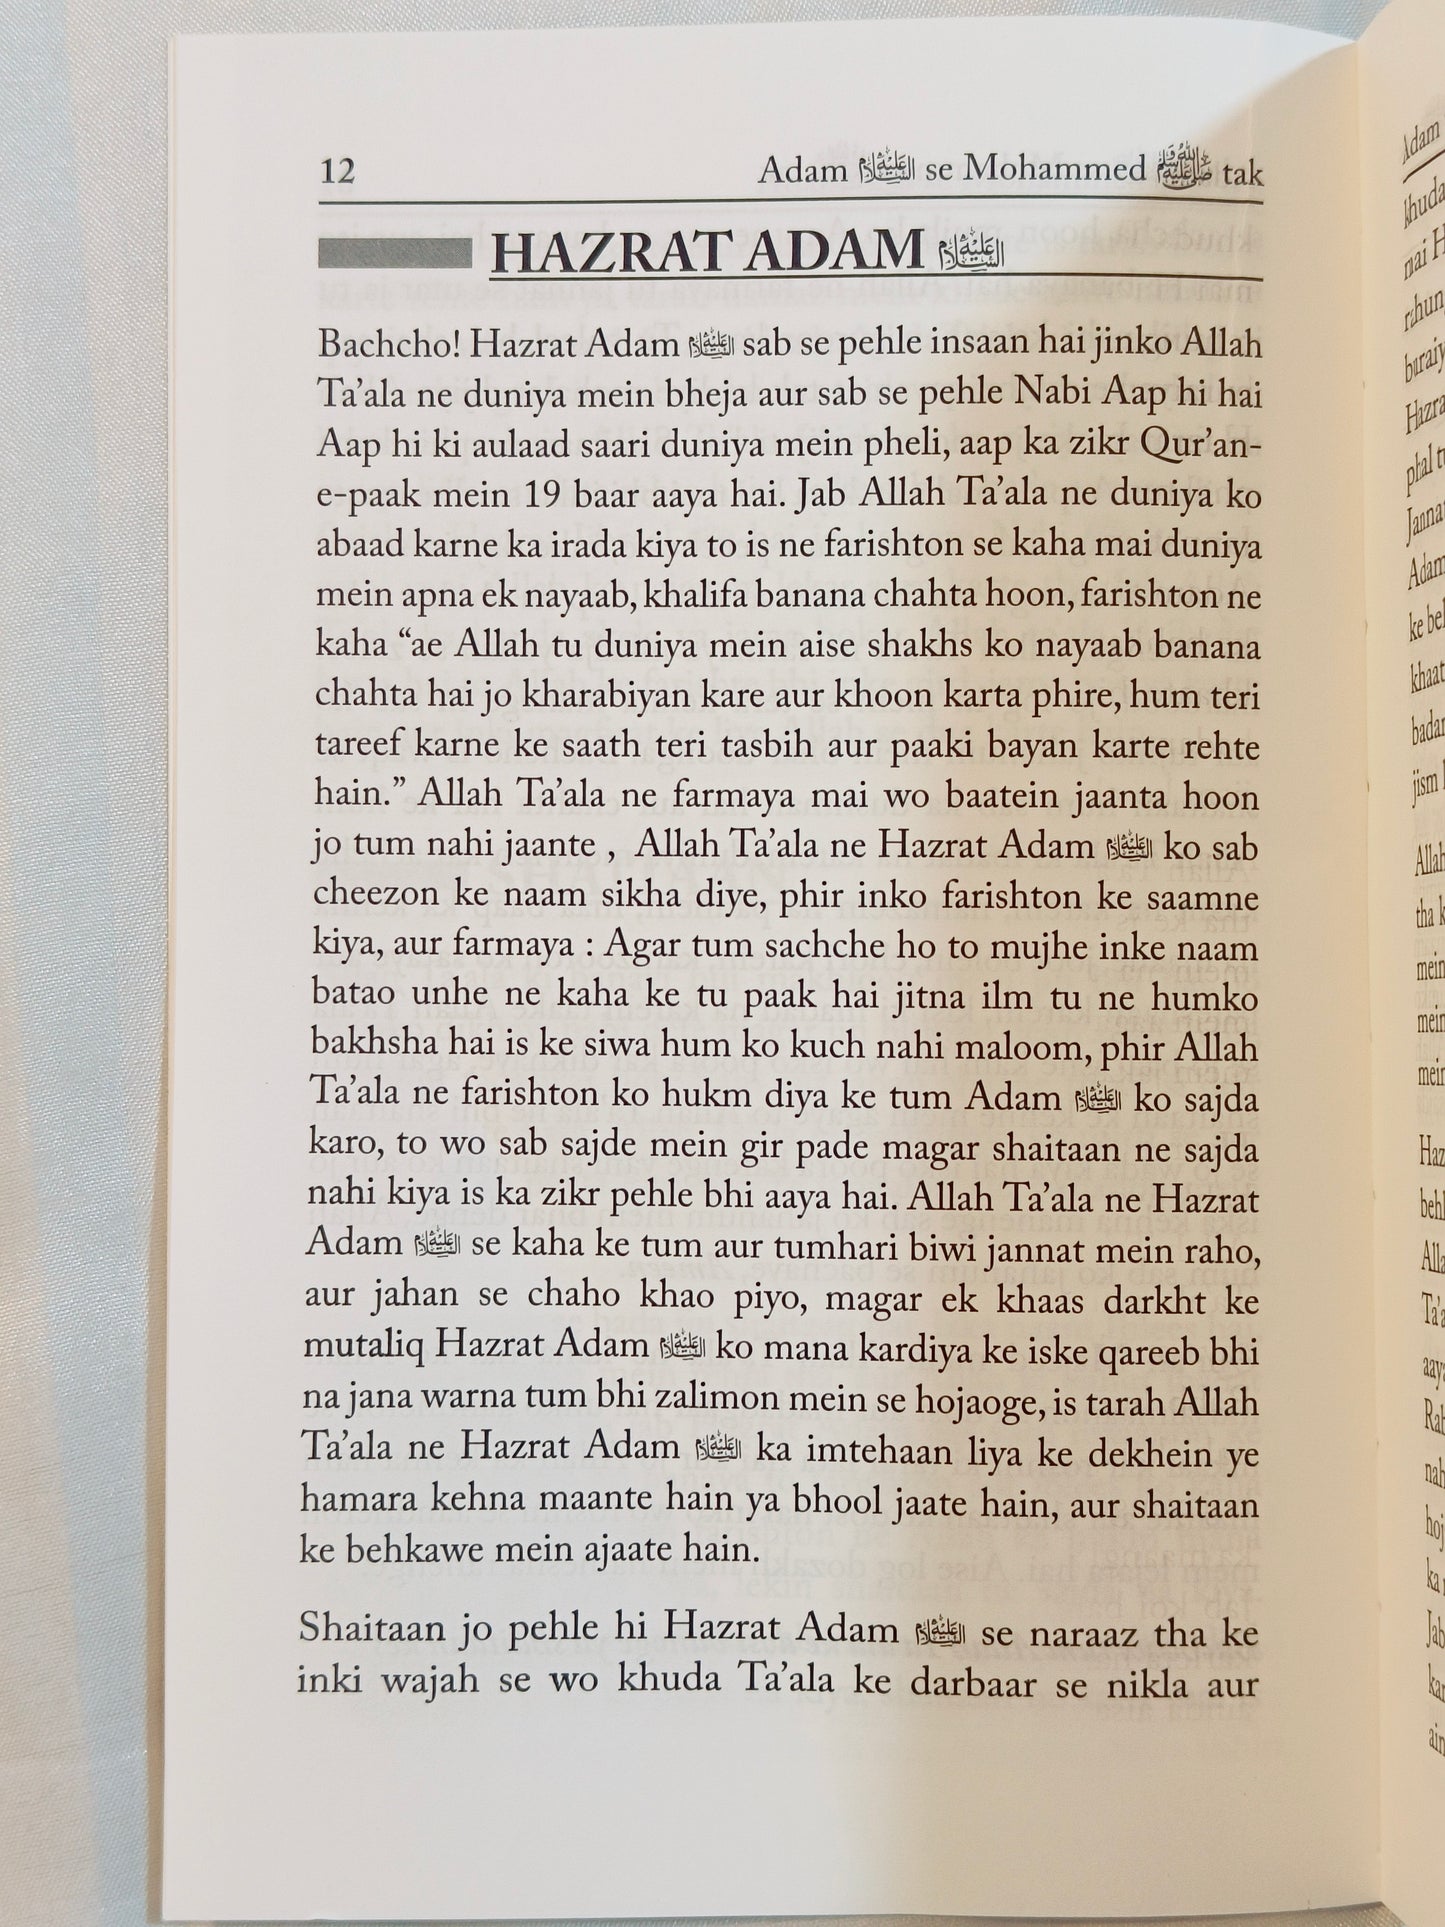 The holy Quran | Adam Se Lekar Muhammad Tak [Combo] - alifthebookstore